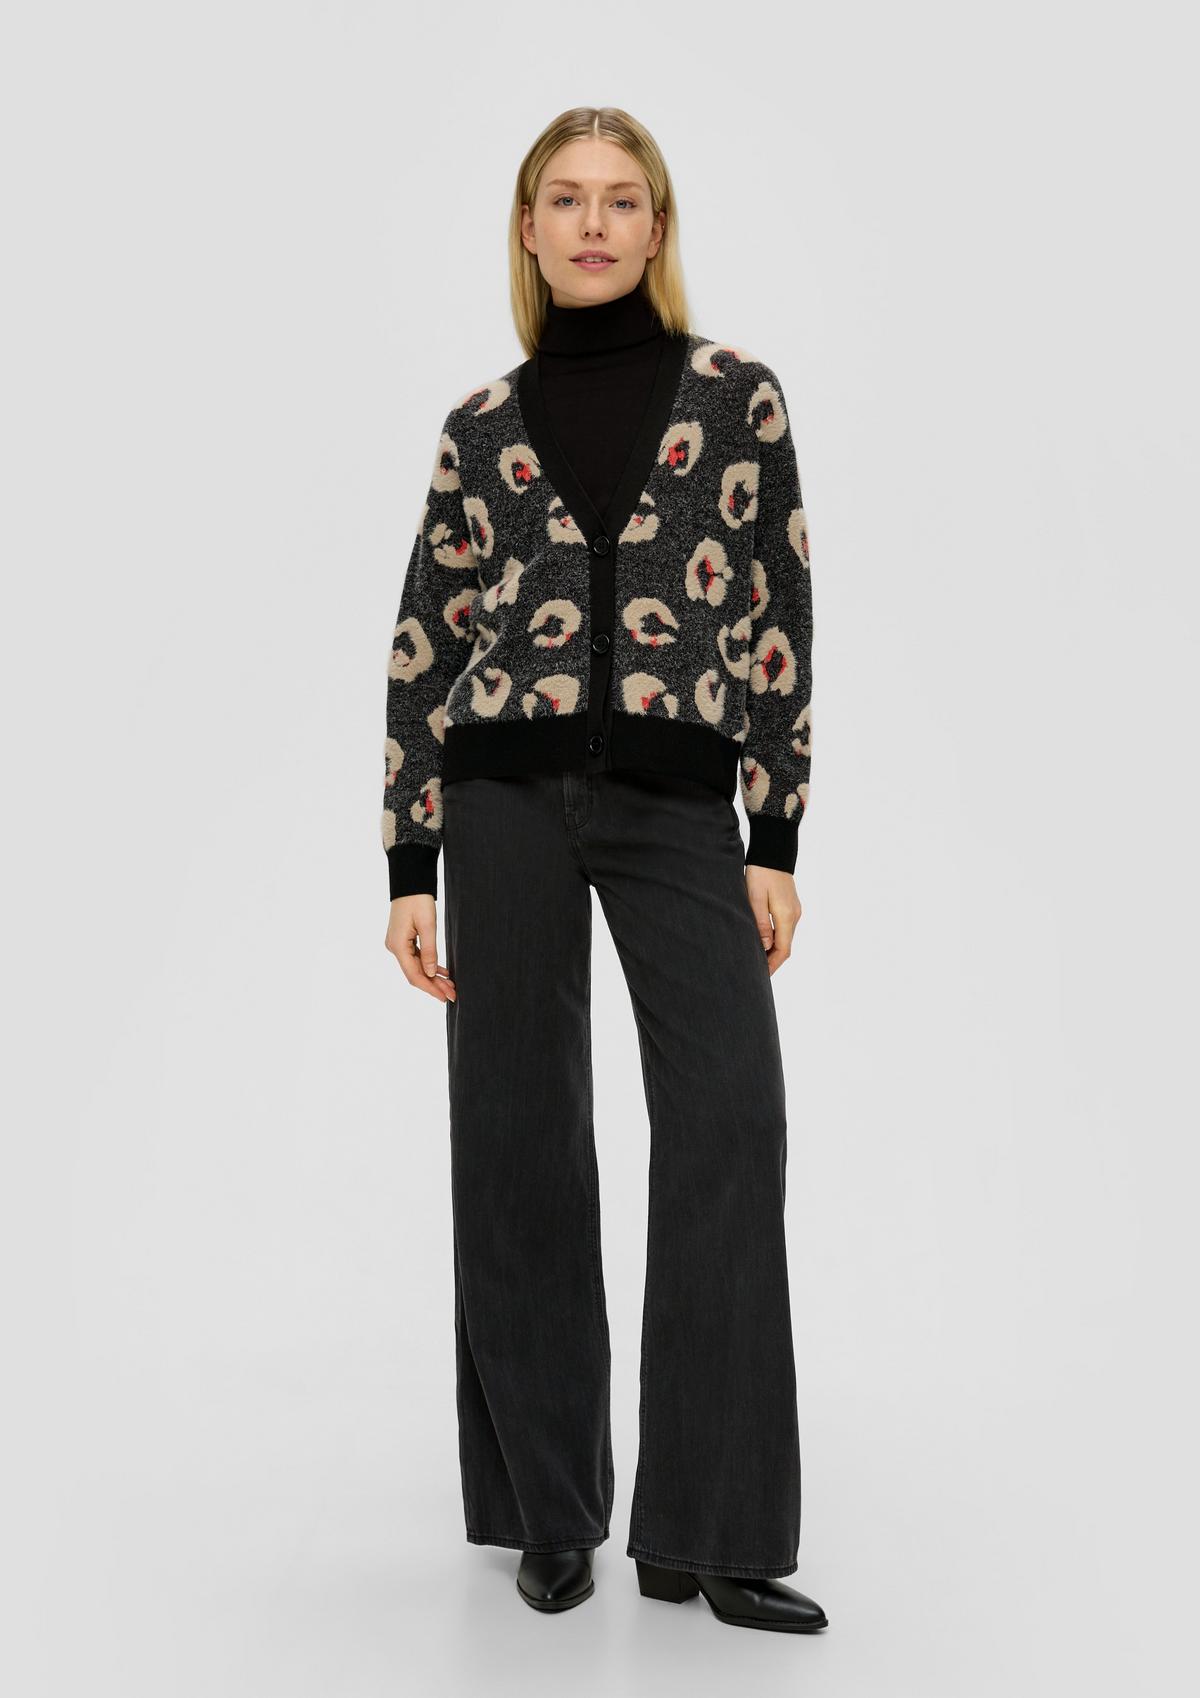 Cardigan with a leopard print pattern - black